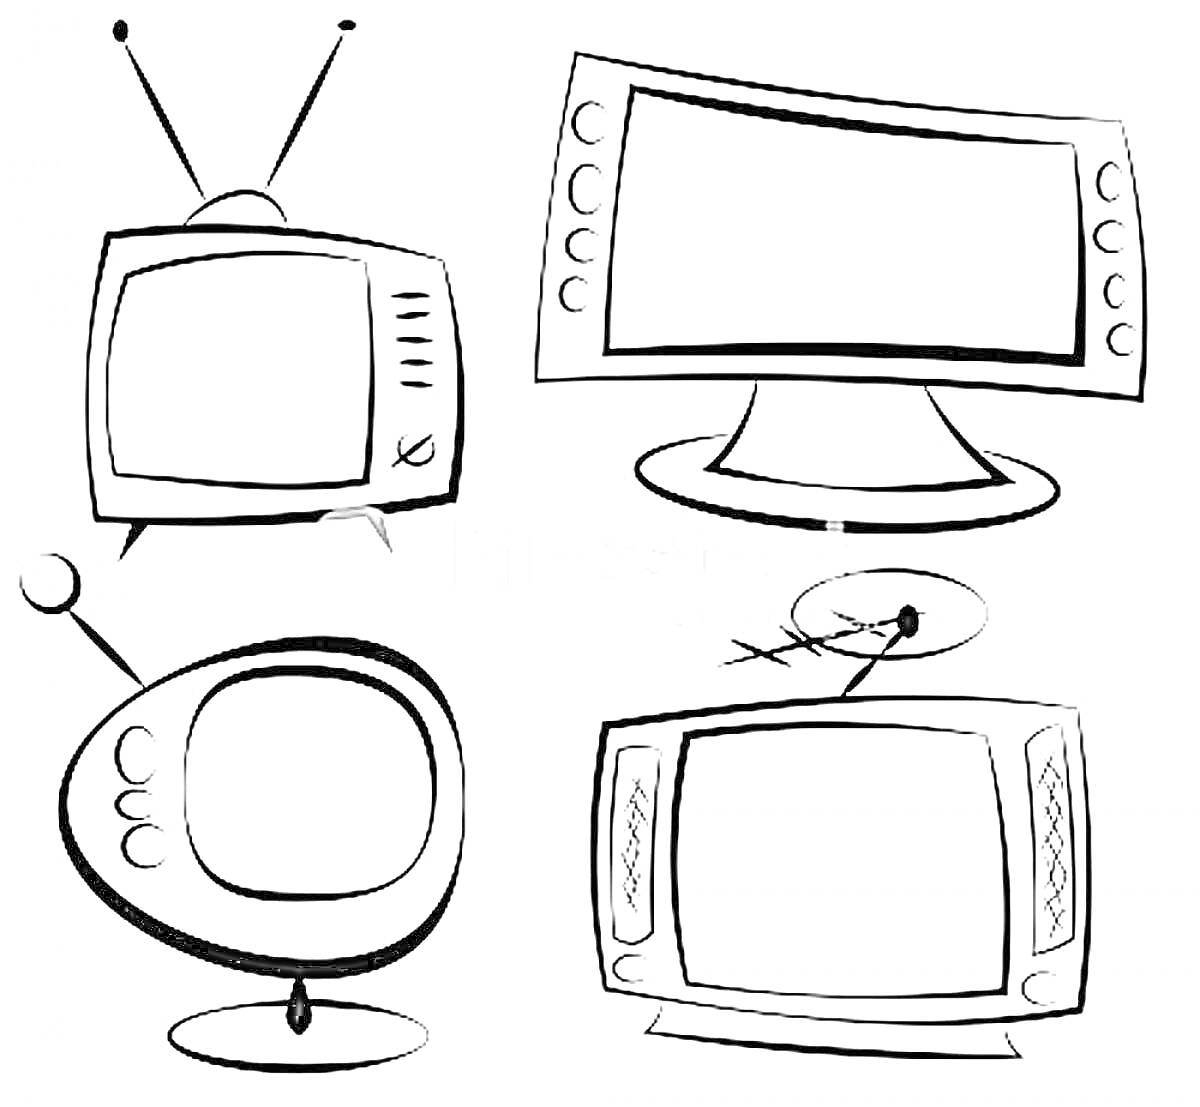 Четыре телевизора с кнопками, антеннами и подставками